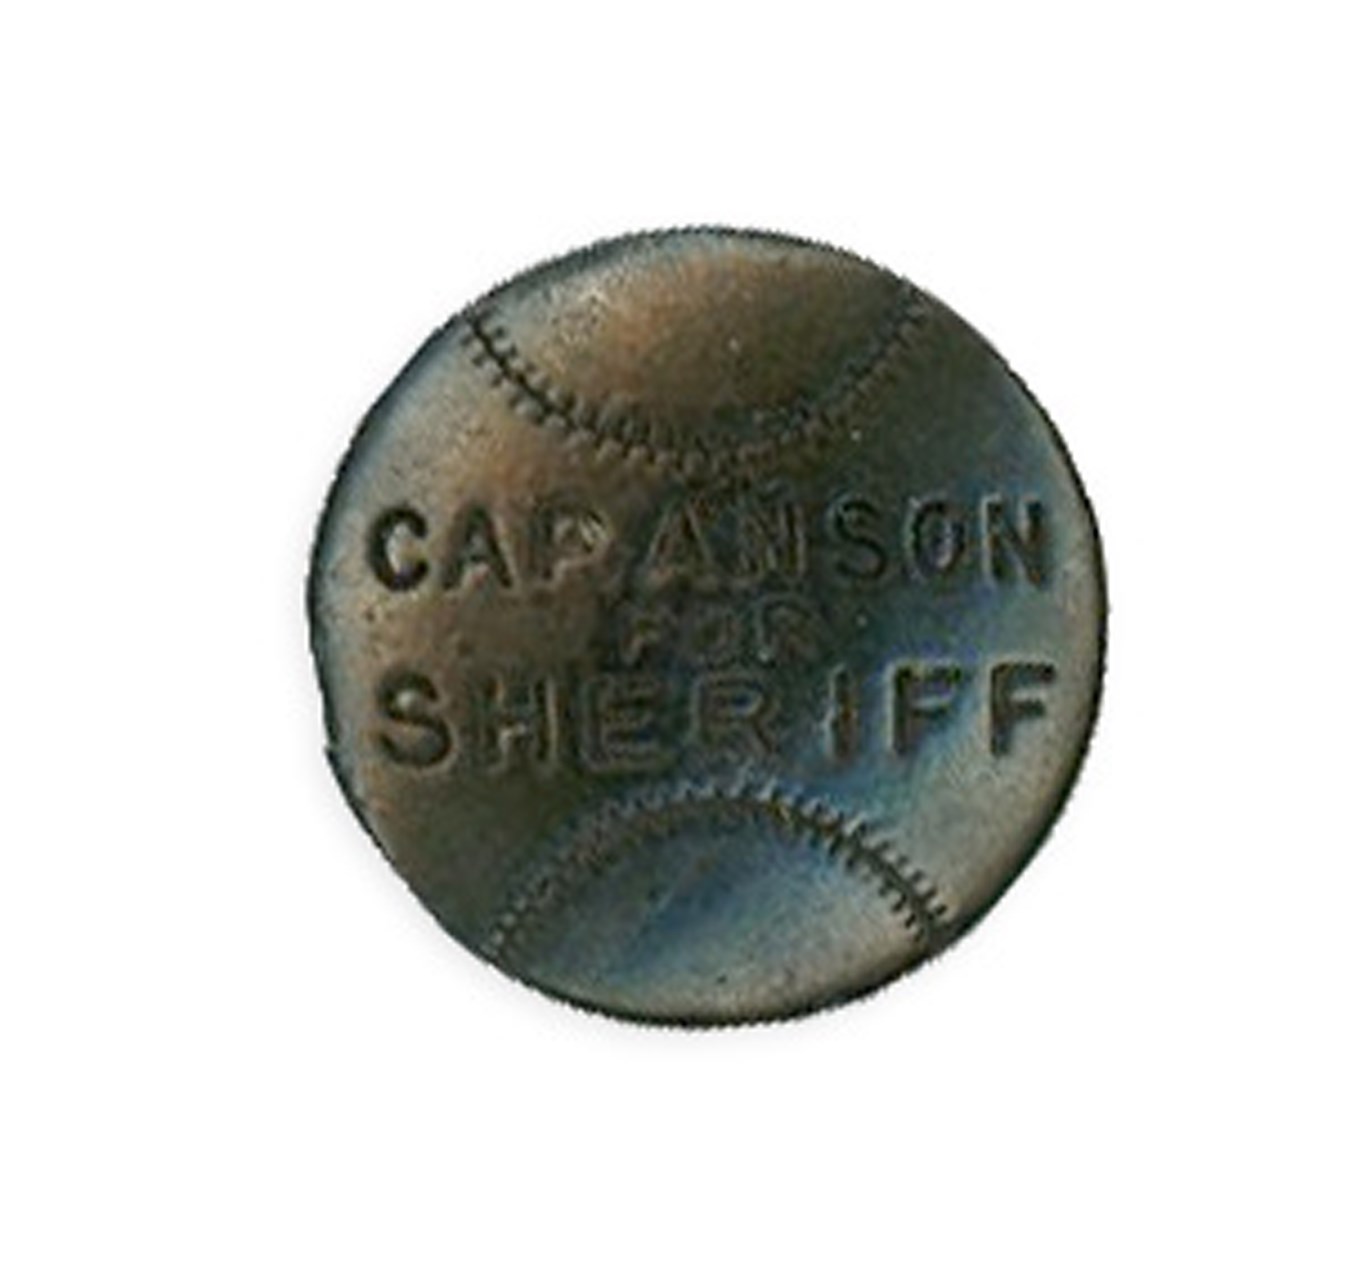 - 1907 "Cap Anson for Sheriff" Metal Lapel Campaign Stud